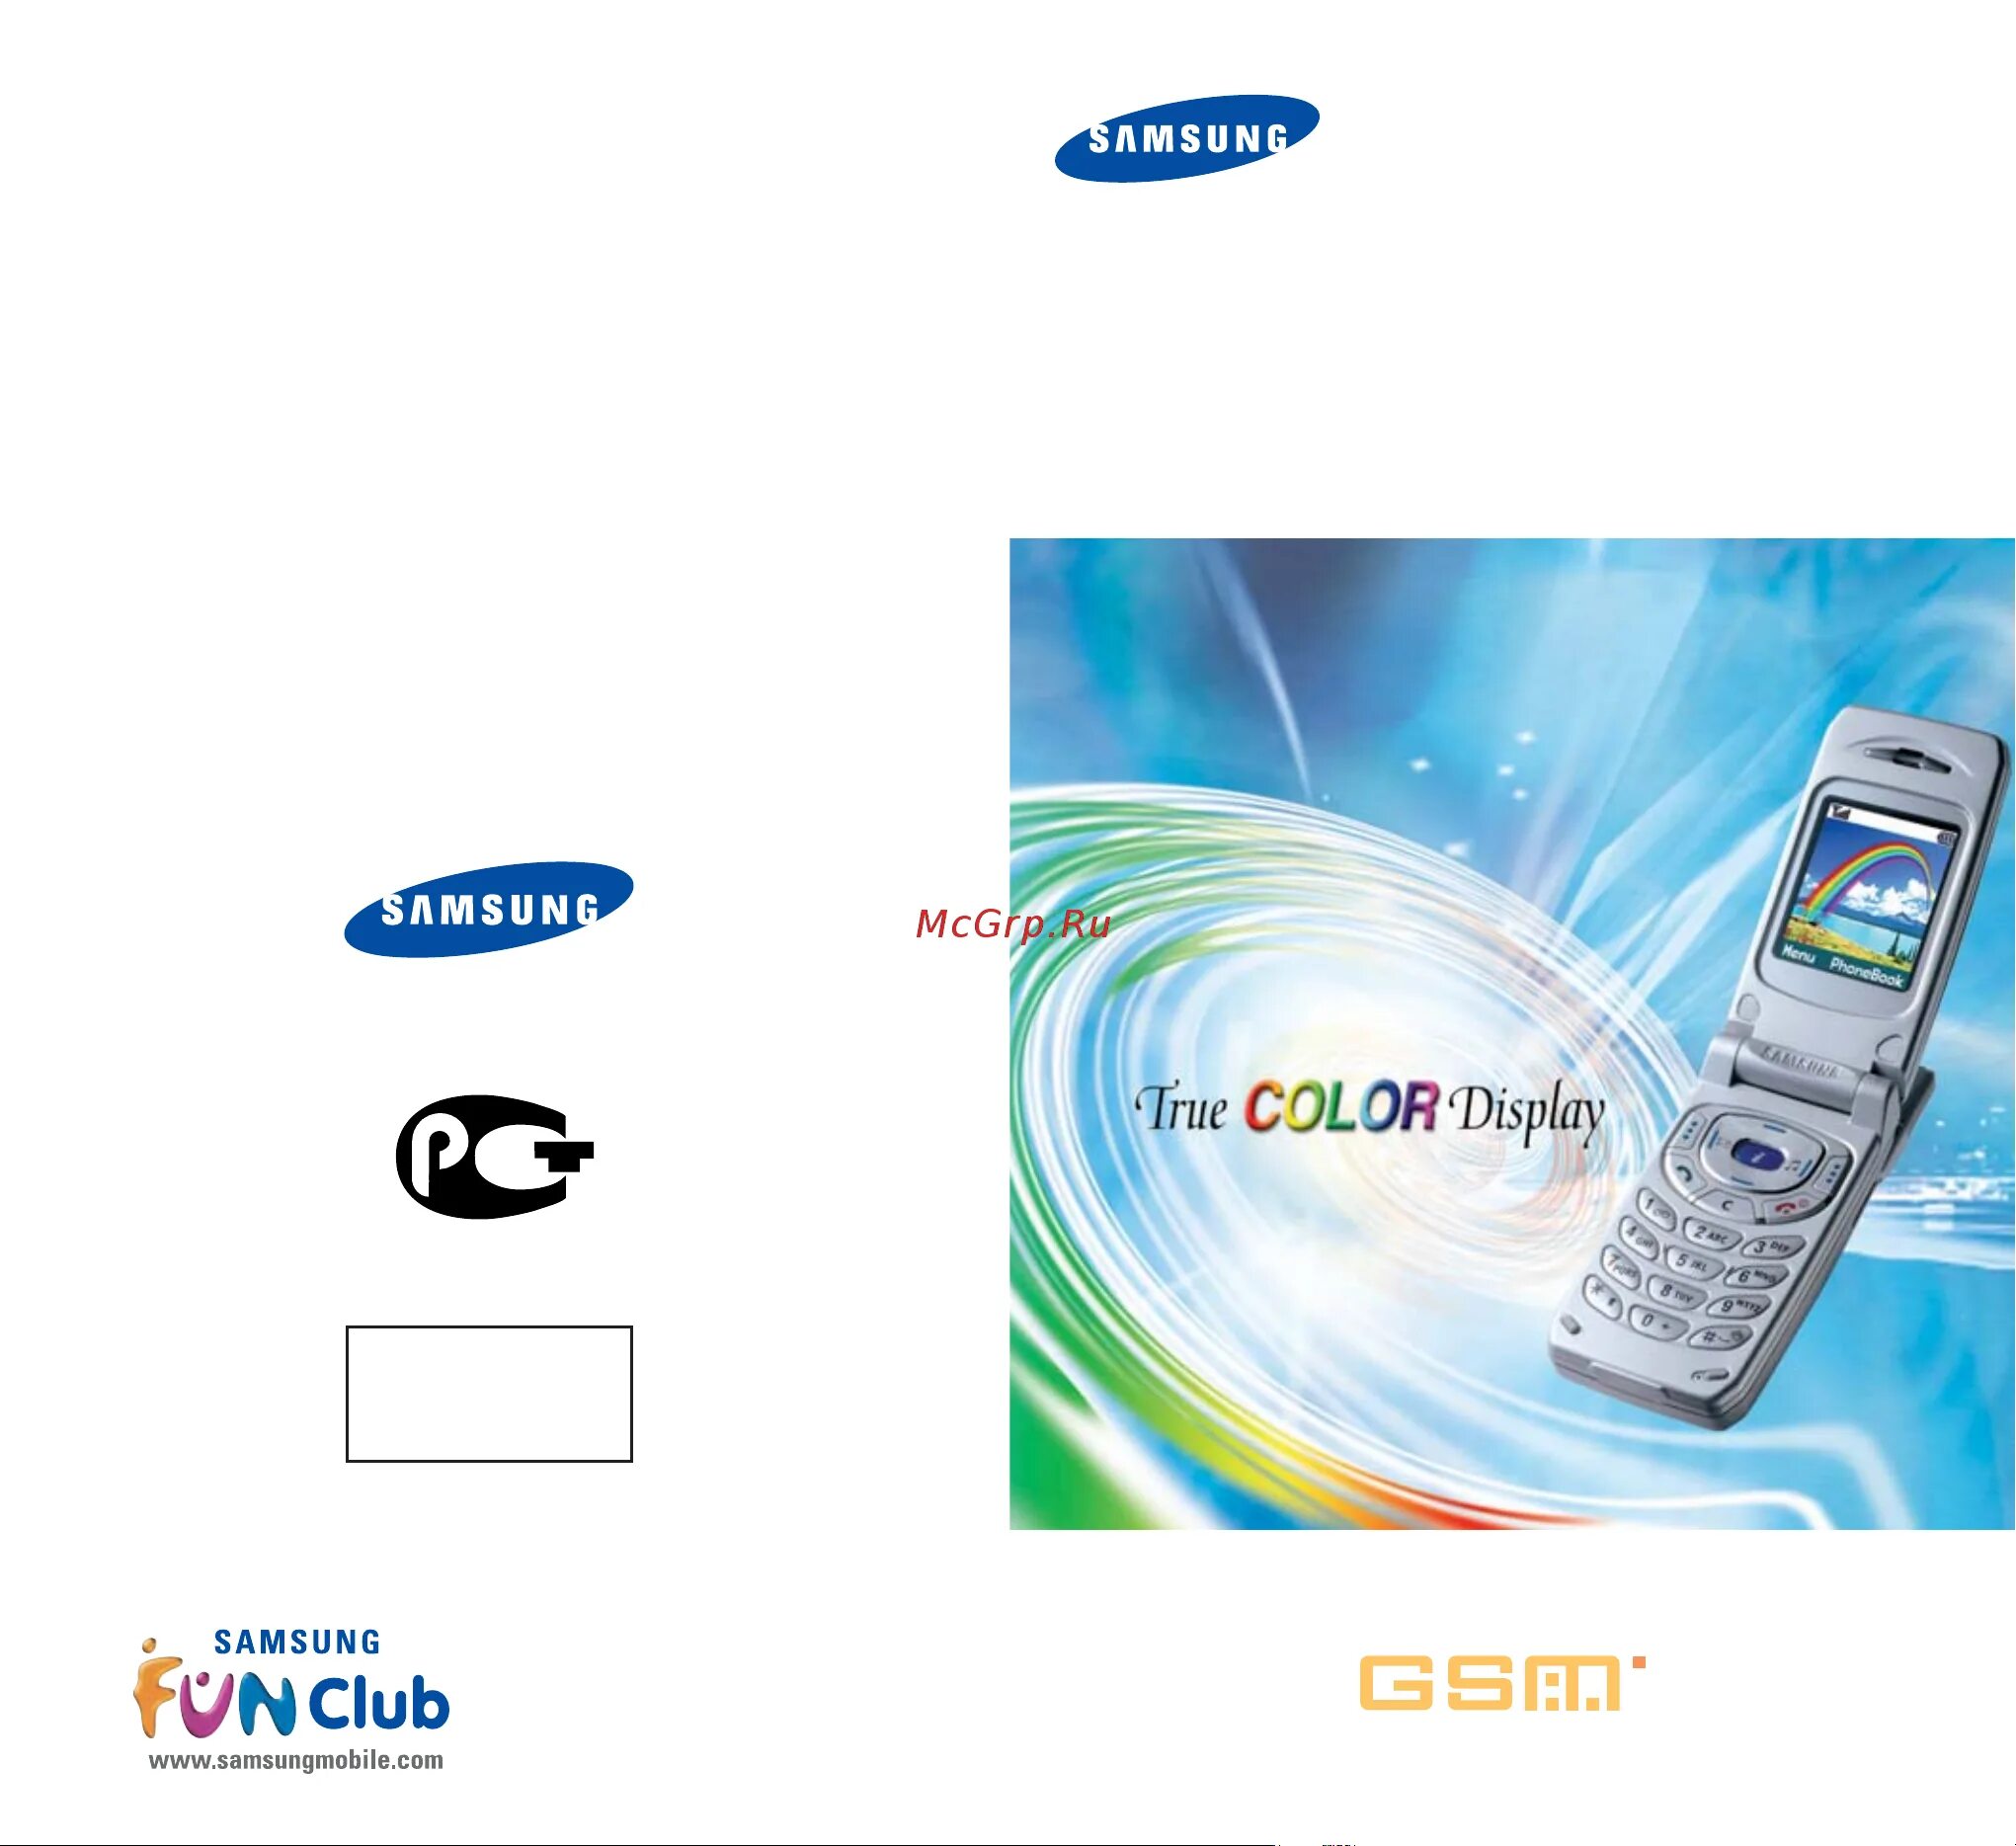 Samsung funs. Samsung fun Club. Samsung gh68. Самсунг т400 телефон. Samsung fun Club телефон.